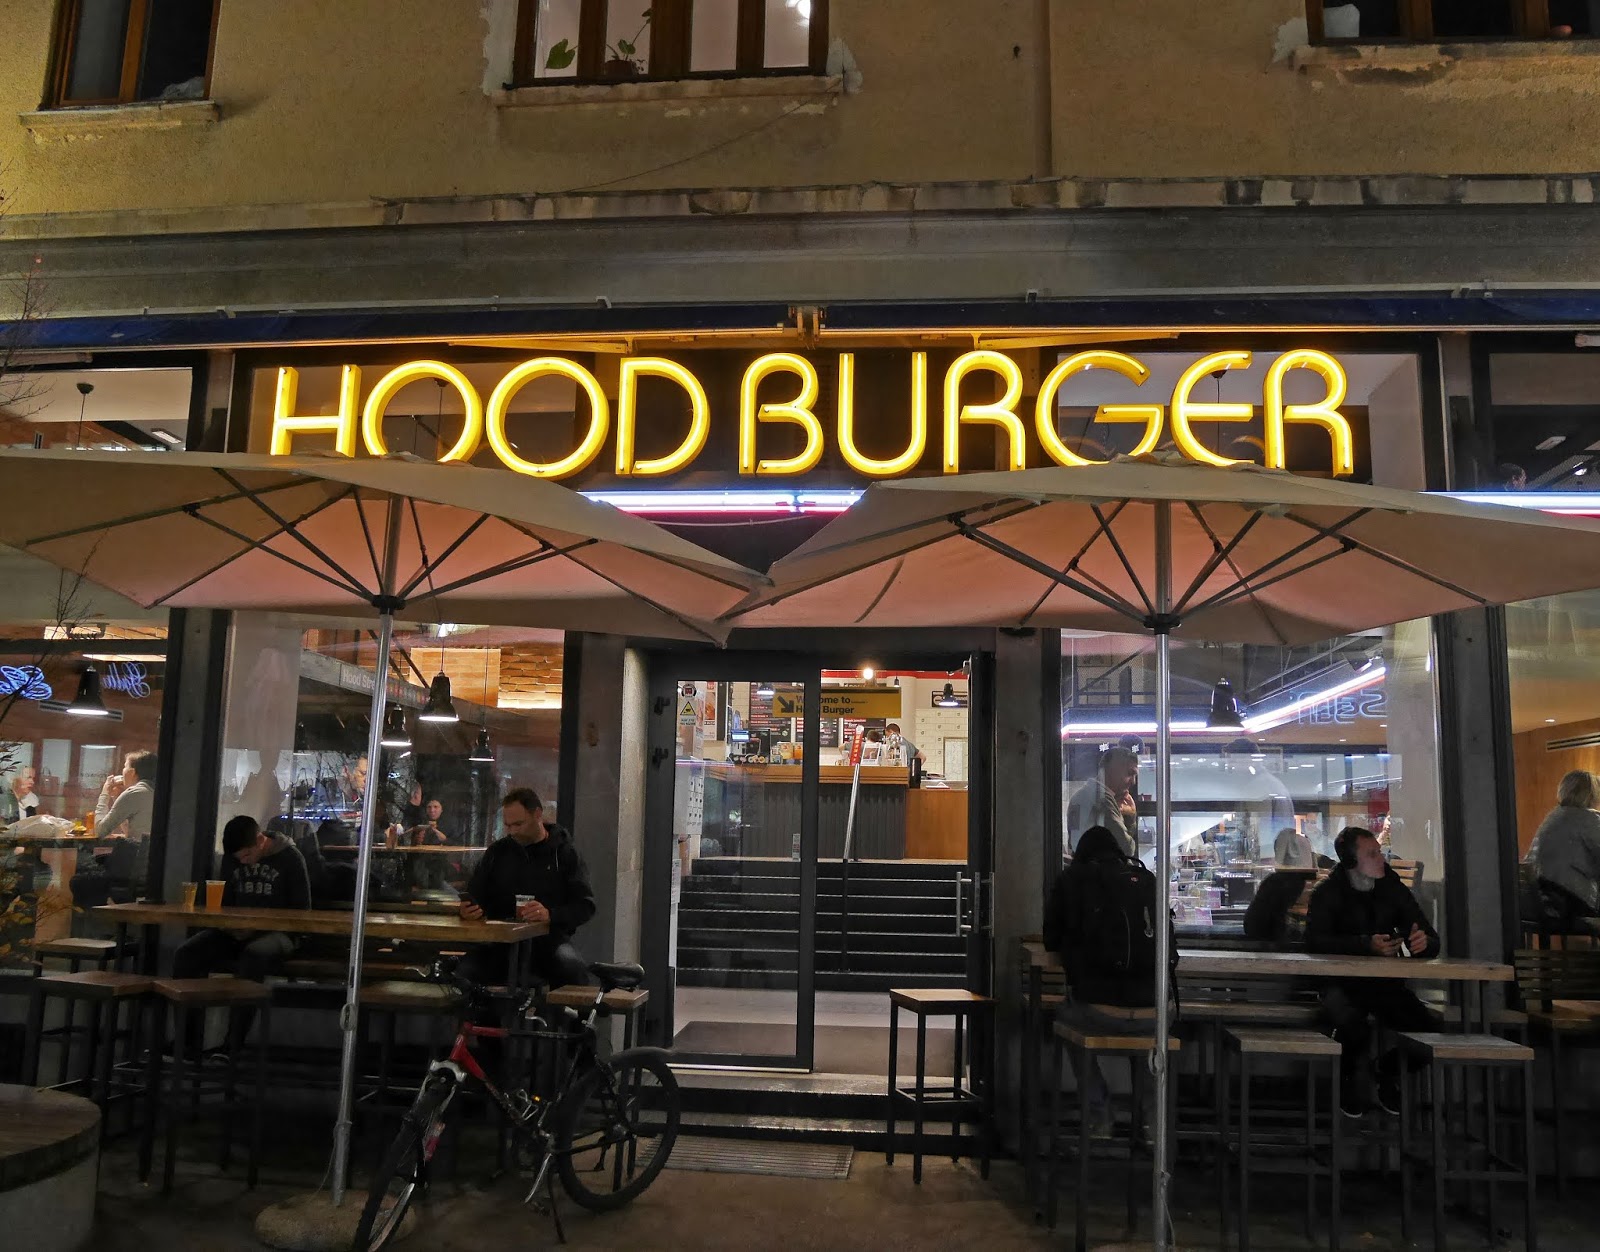 Exterior of Hood Burger in Ljubljana, Slovenia